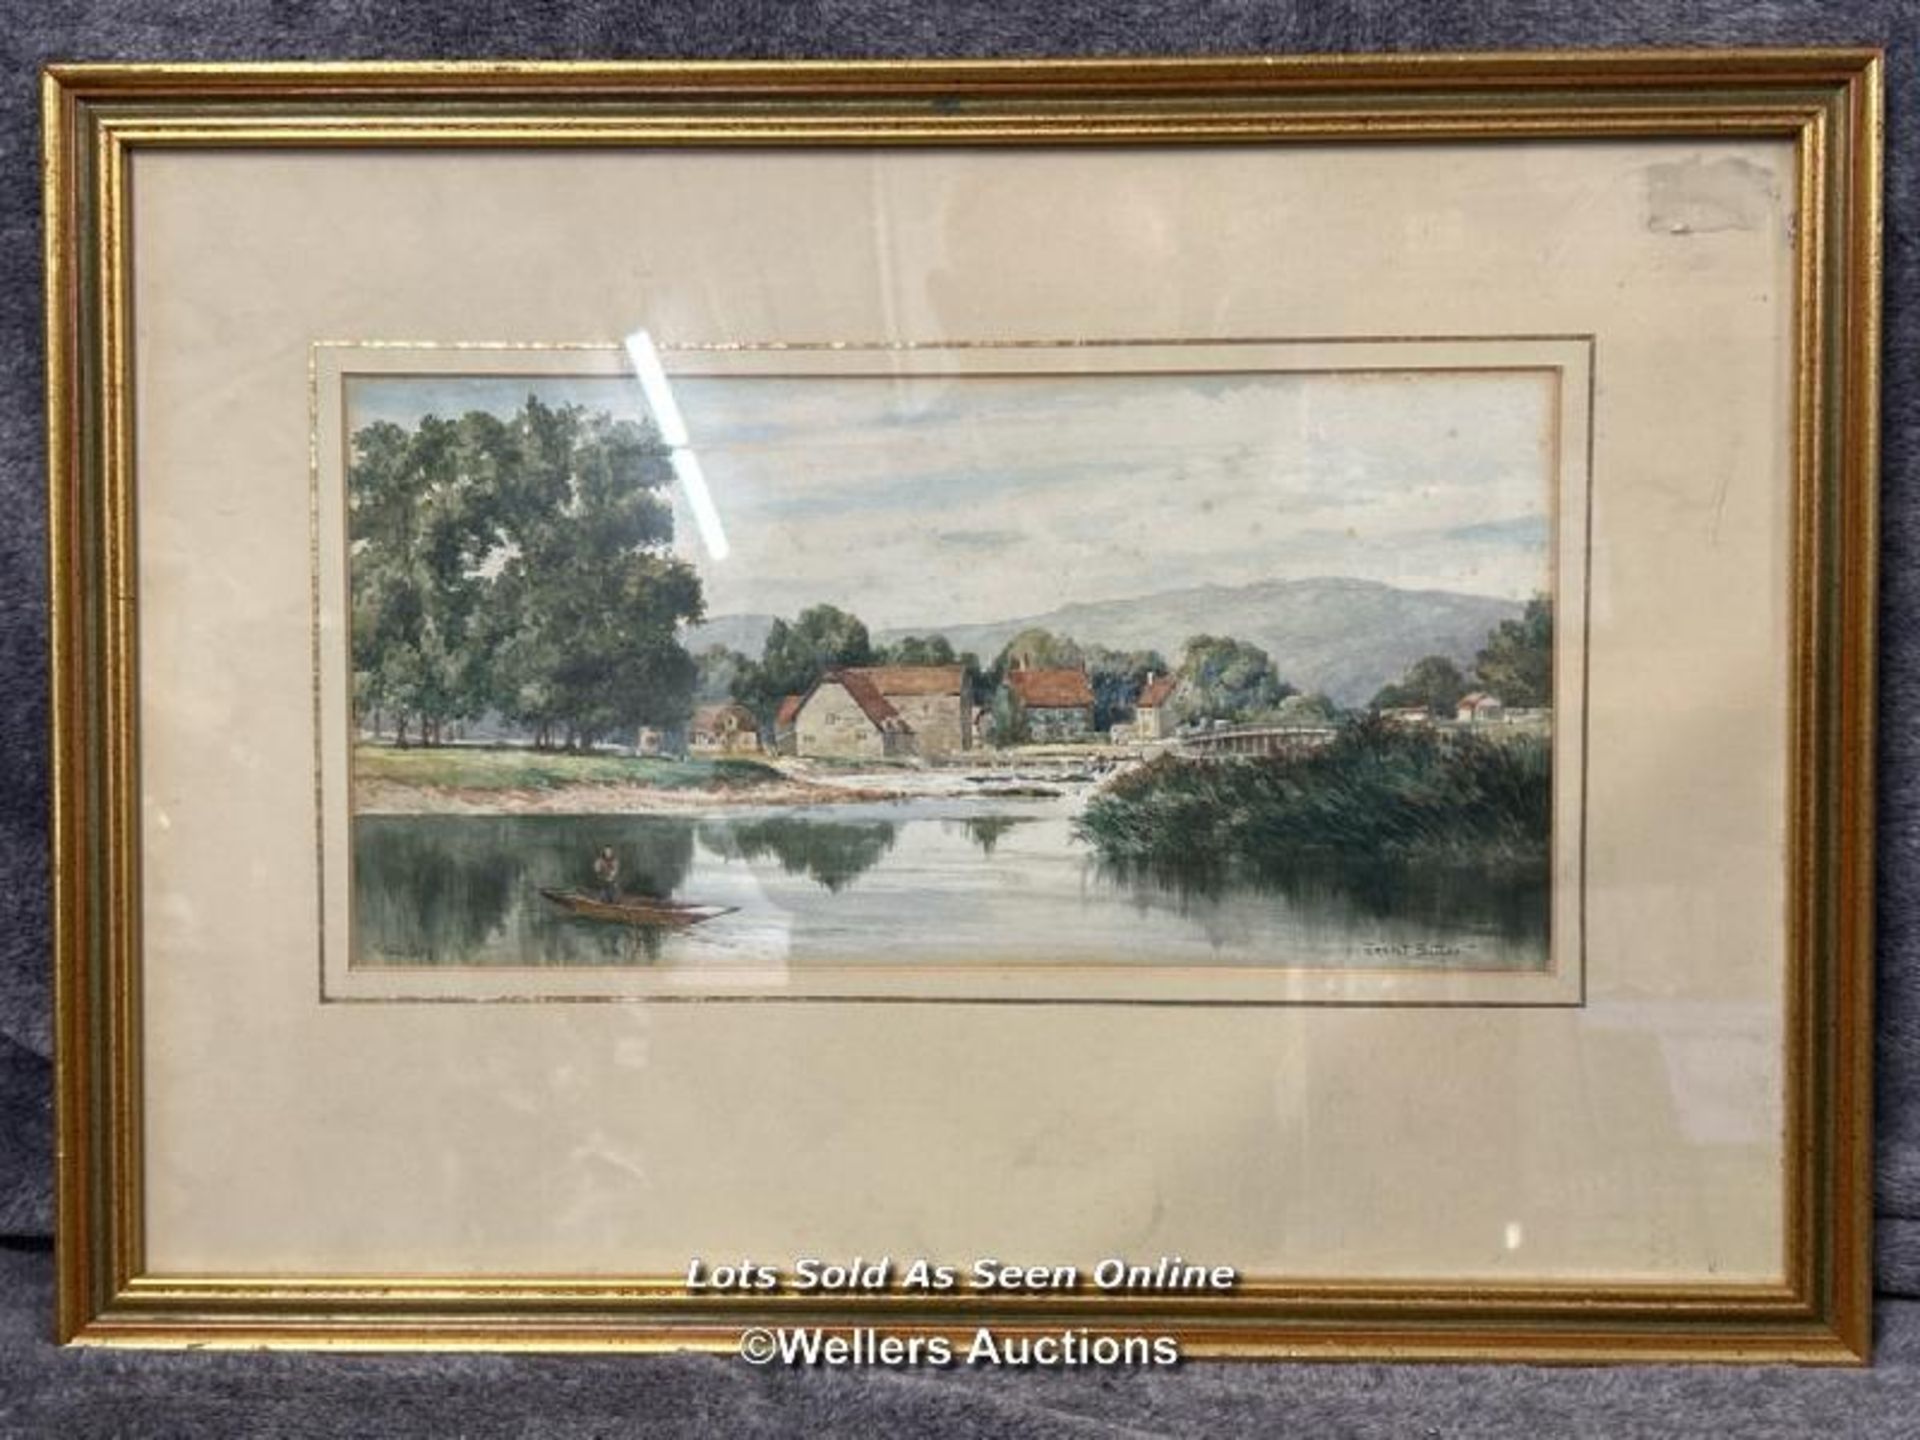 Ernest Stuart (F.1889 - 1903) 'Streetley on Upper Thames Berkshire' watercolour, 35 x 17cm, signed